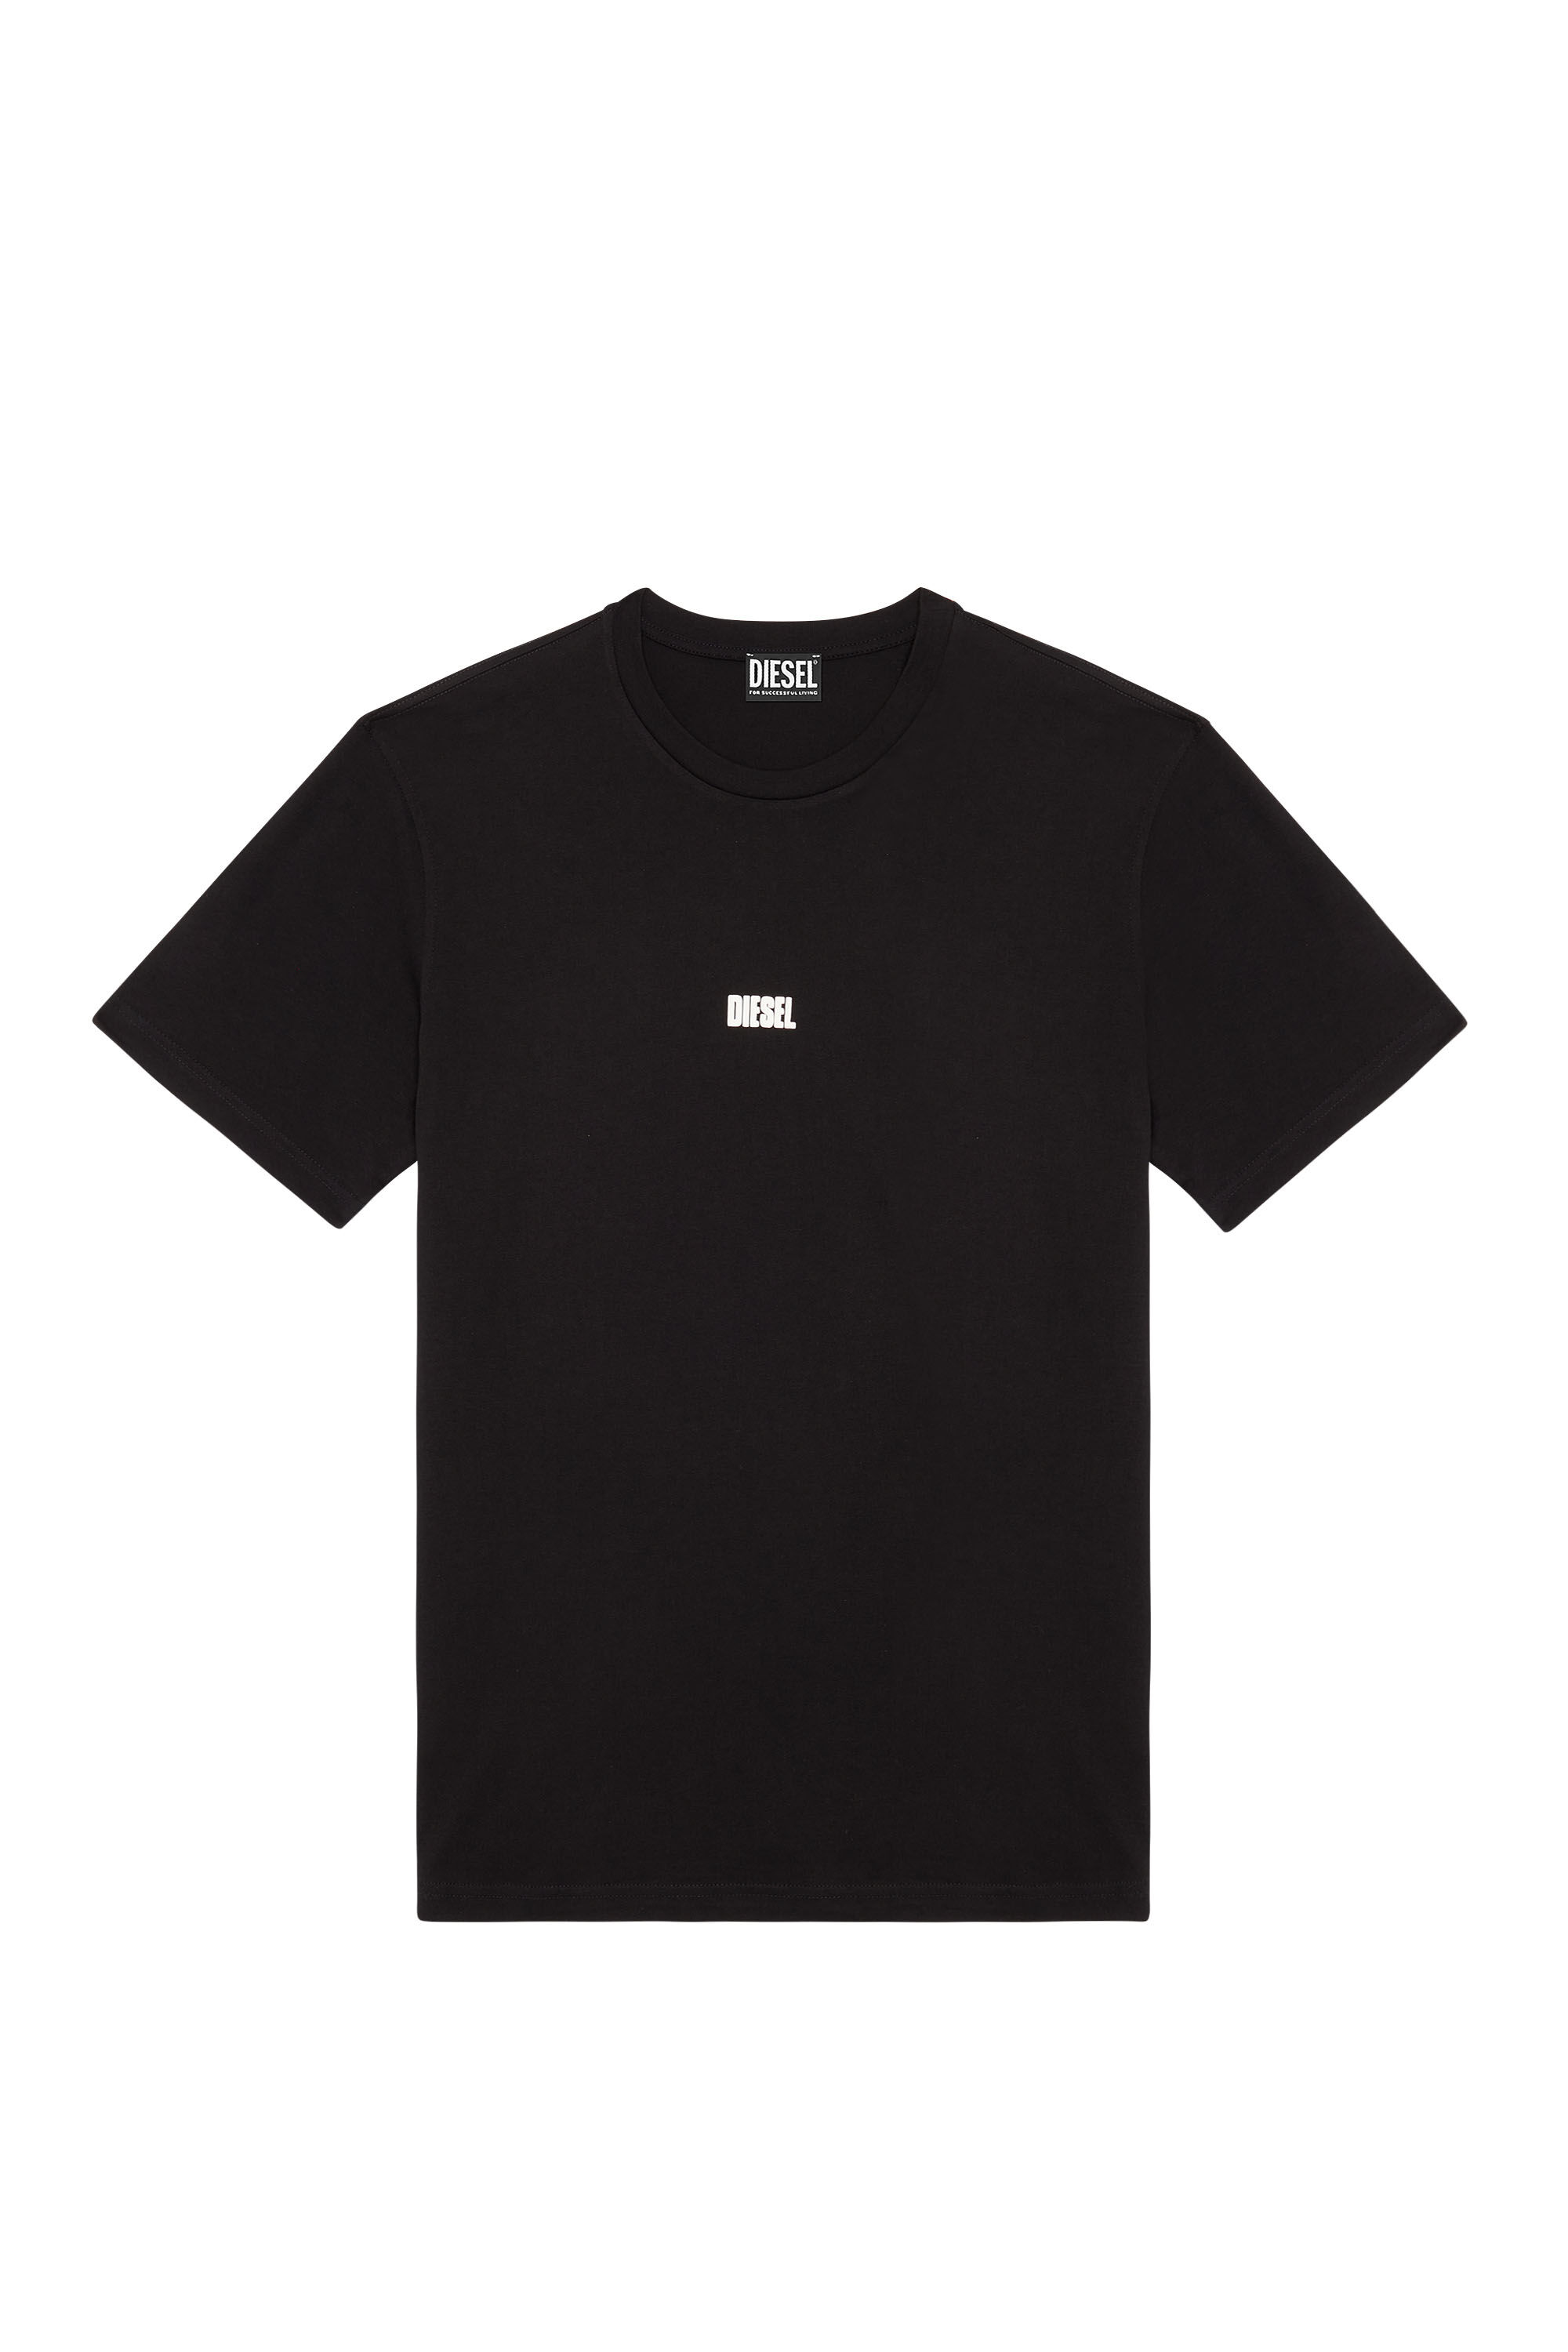 Diesel - T-JUST-G23, Man T-shirt with puff Diesel logo in Black - Image 2